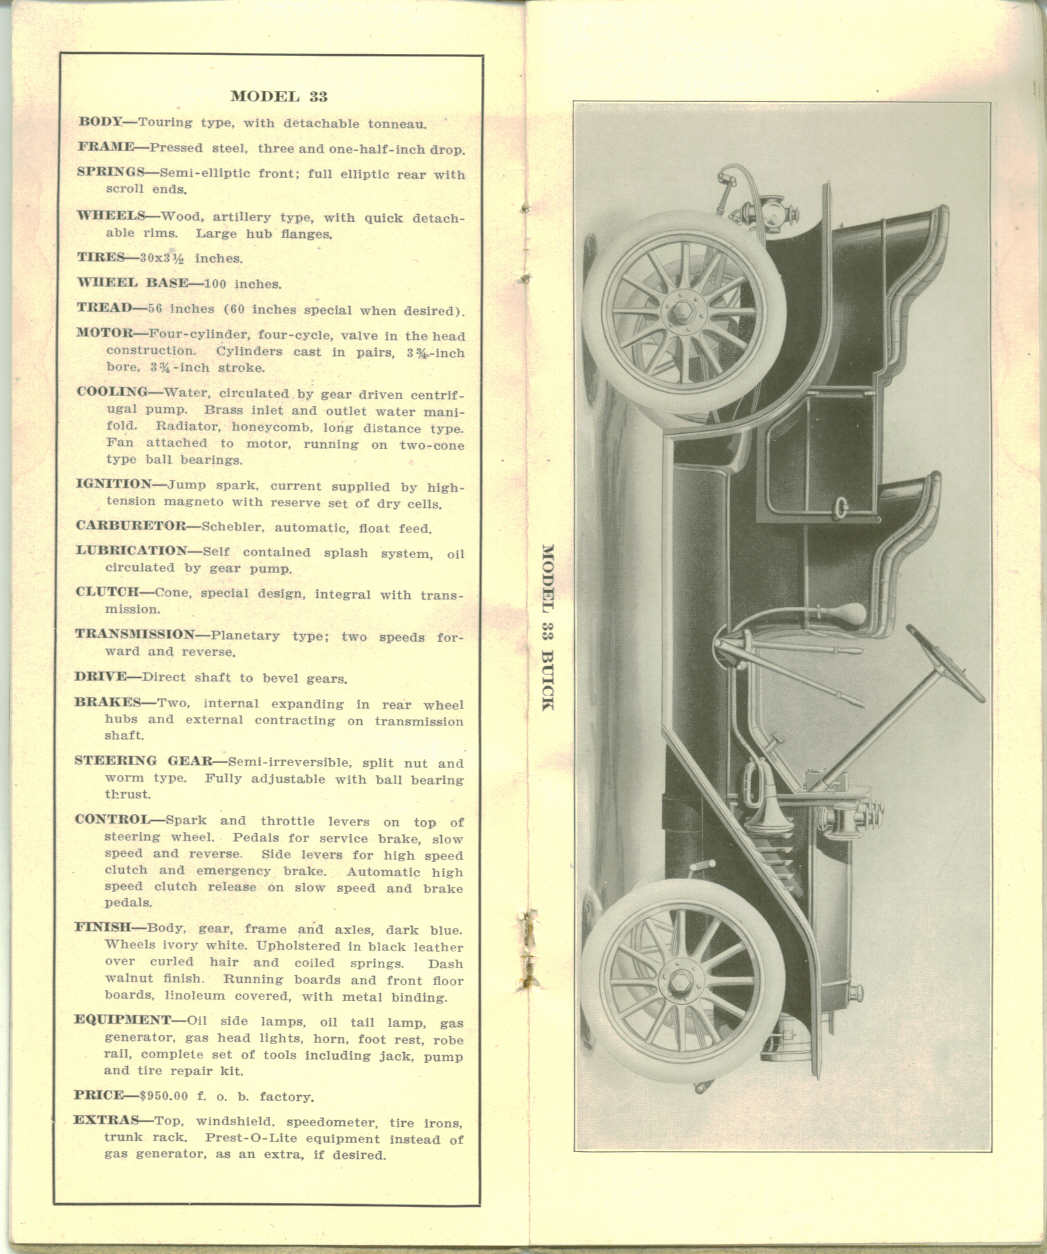 1911 Buick Pocket Booklet-06-07